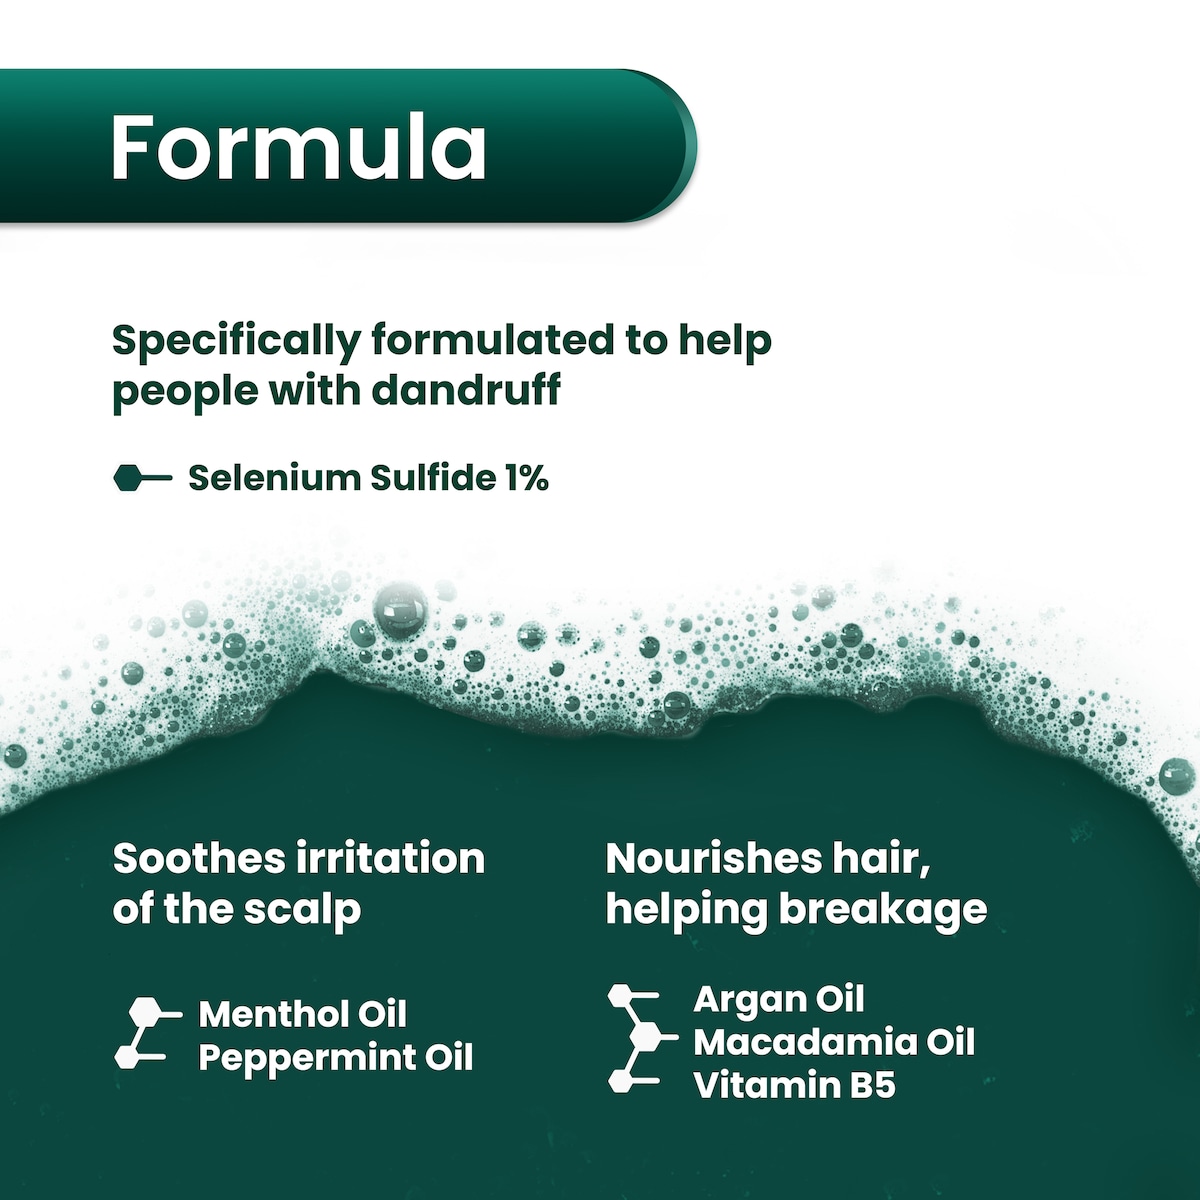 Selsun Green Anti-Dandruff Shampoo 200ml